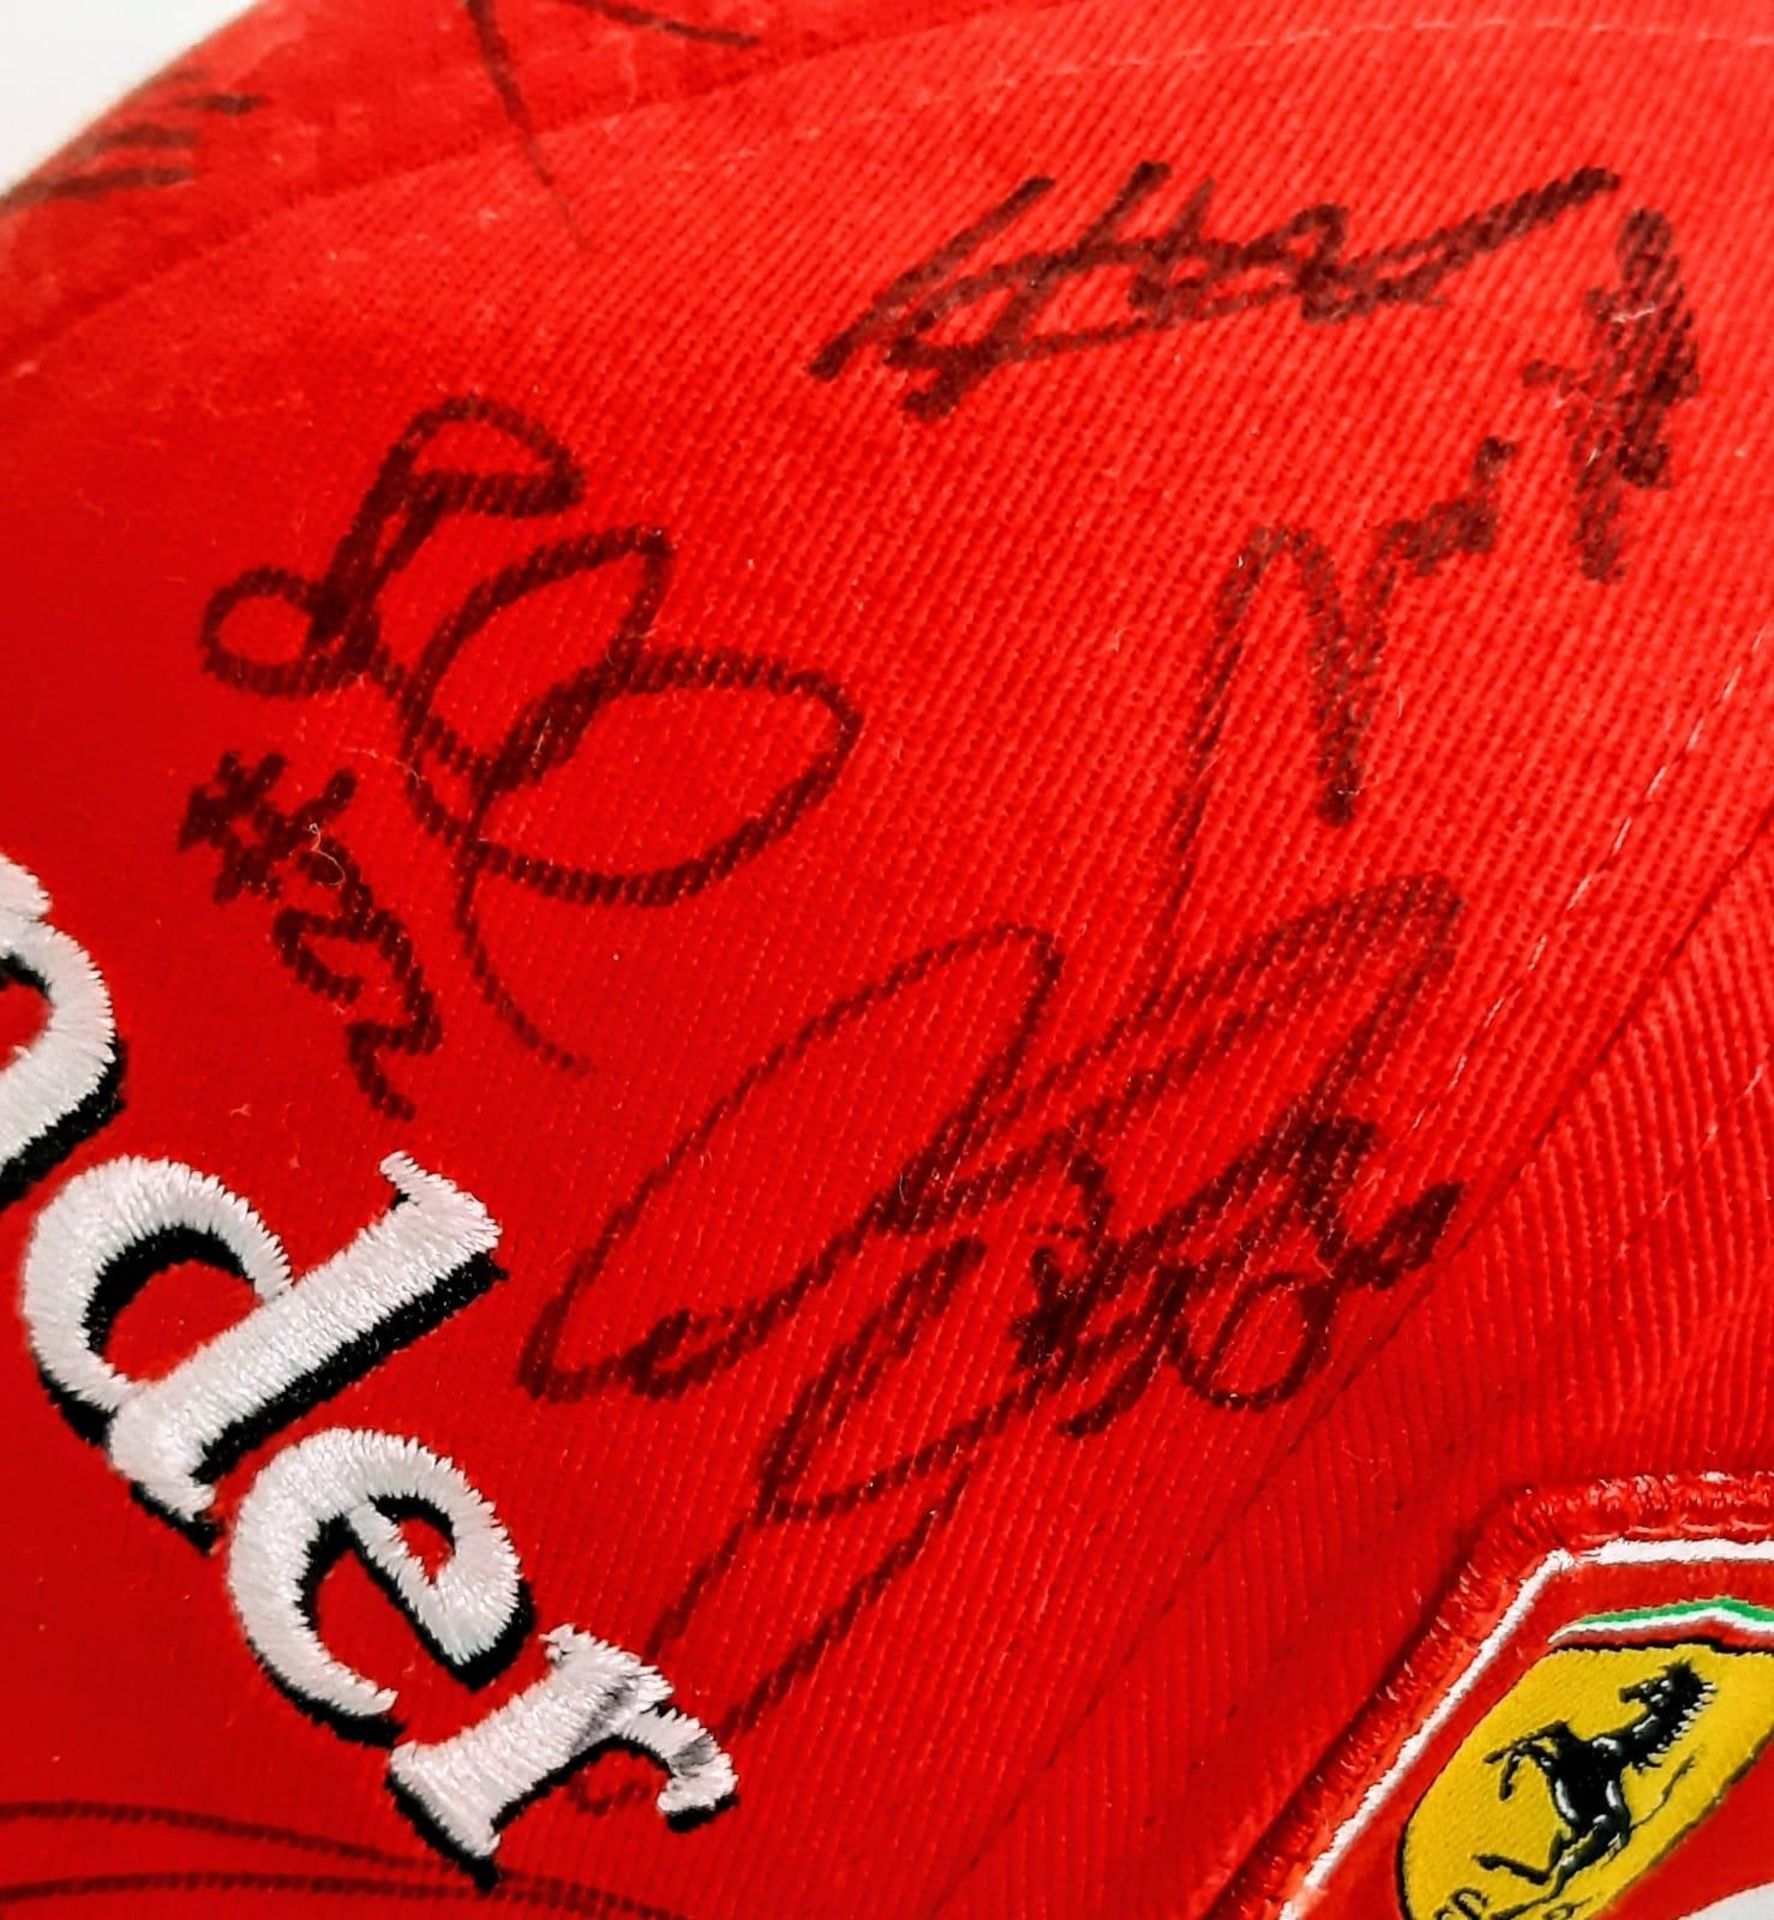 An Official Ferrari Team Cap - Over 20 signatures including Ferrari drivers and team principals. - Image 13 of 14